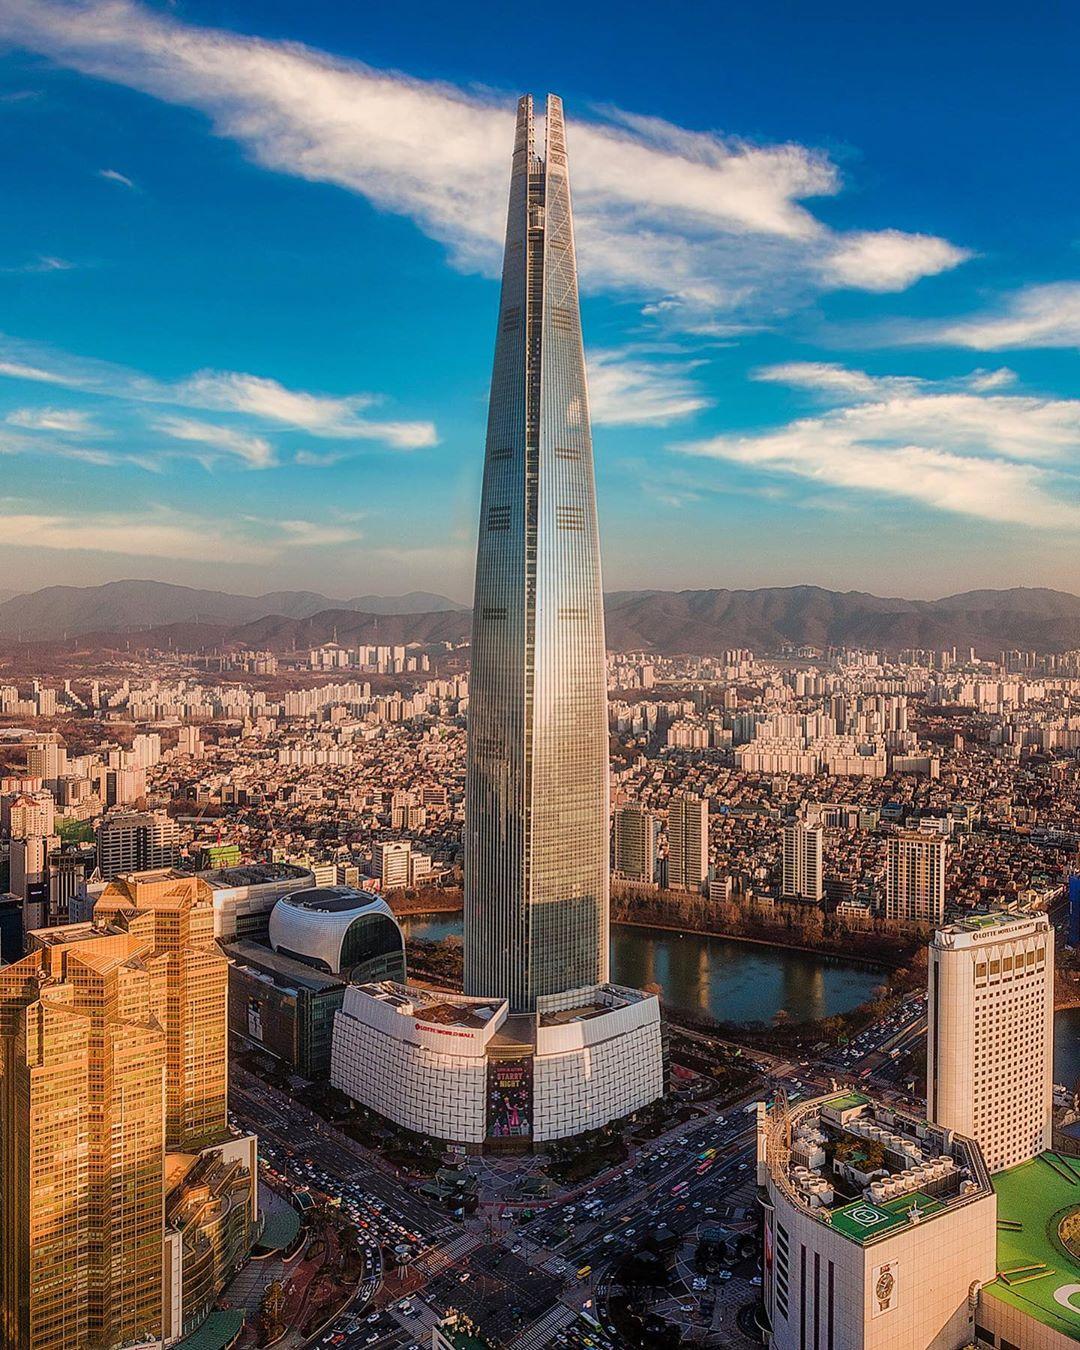 Lotte world tower coreia do sul